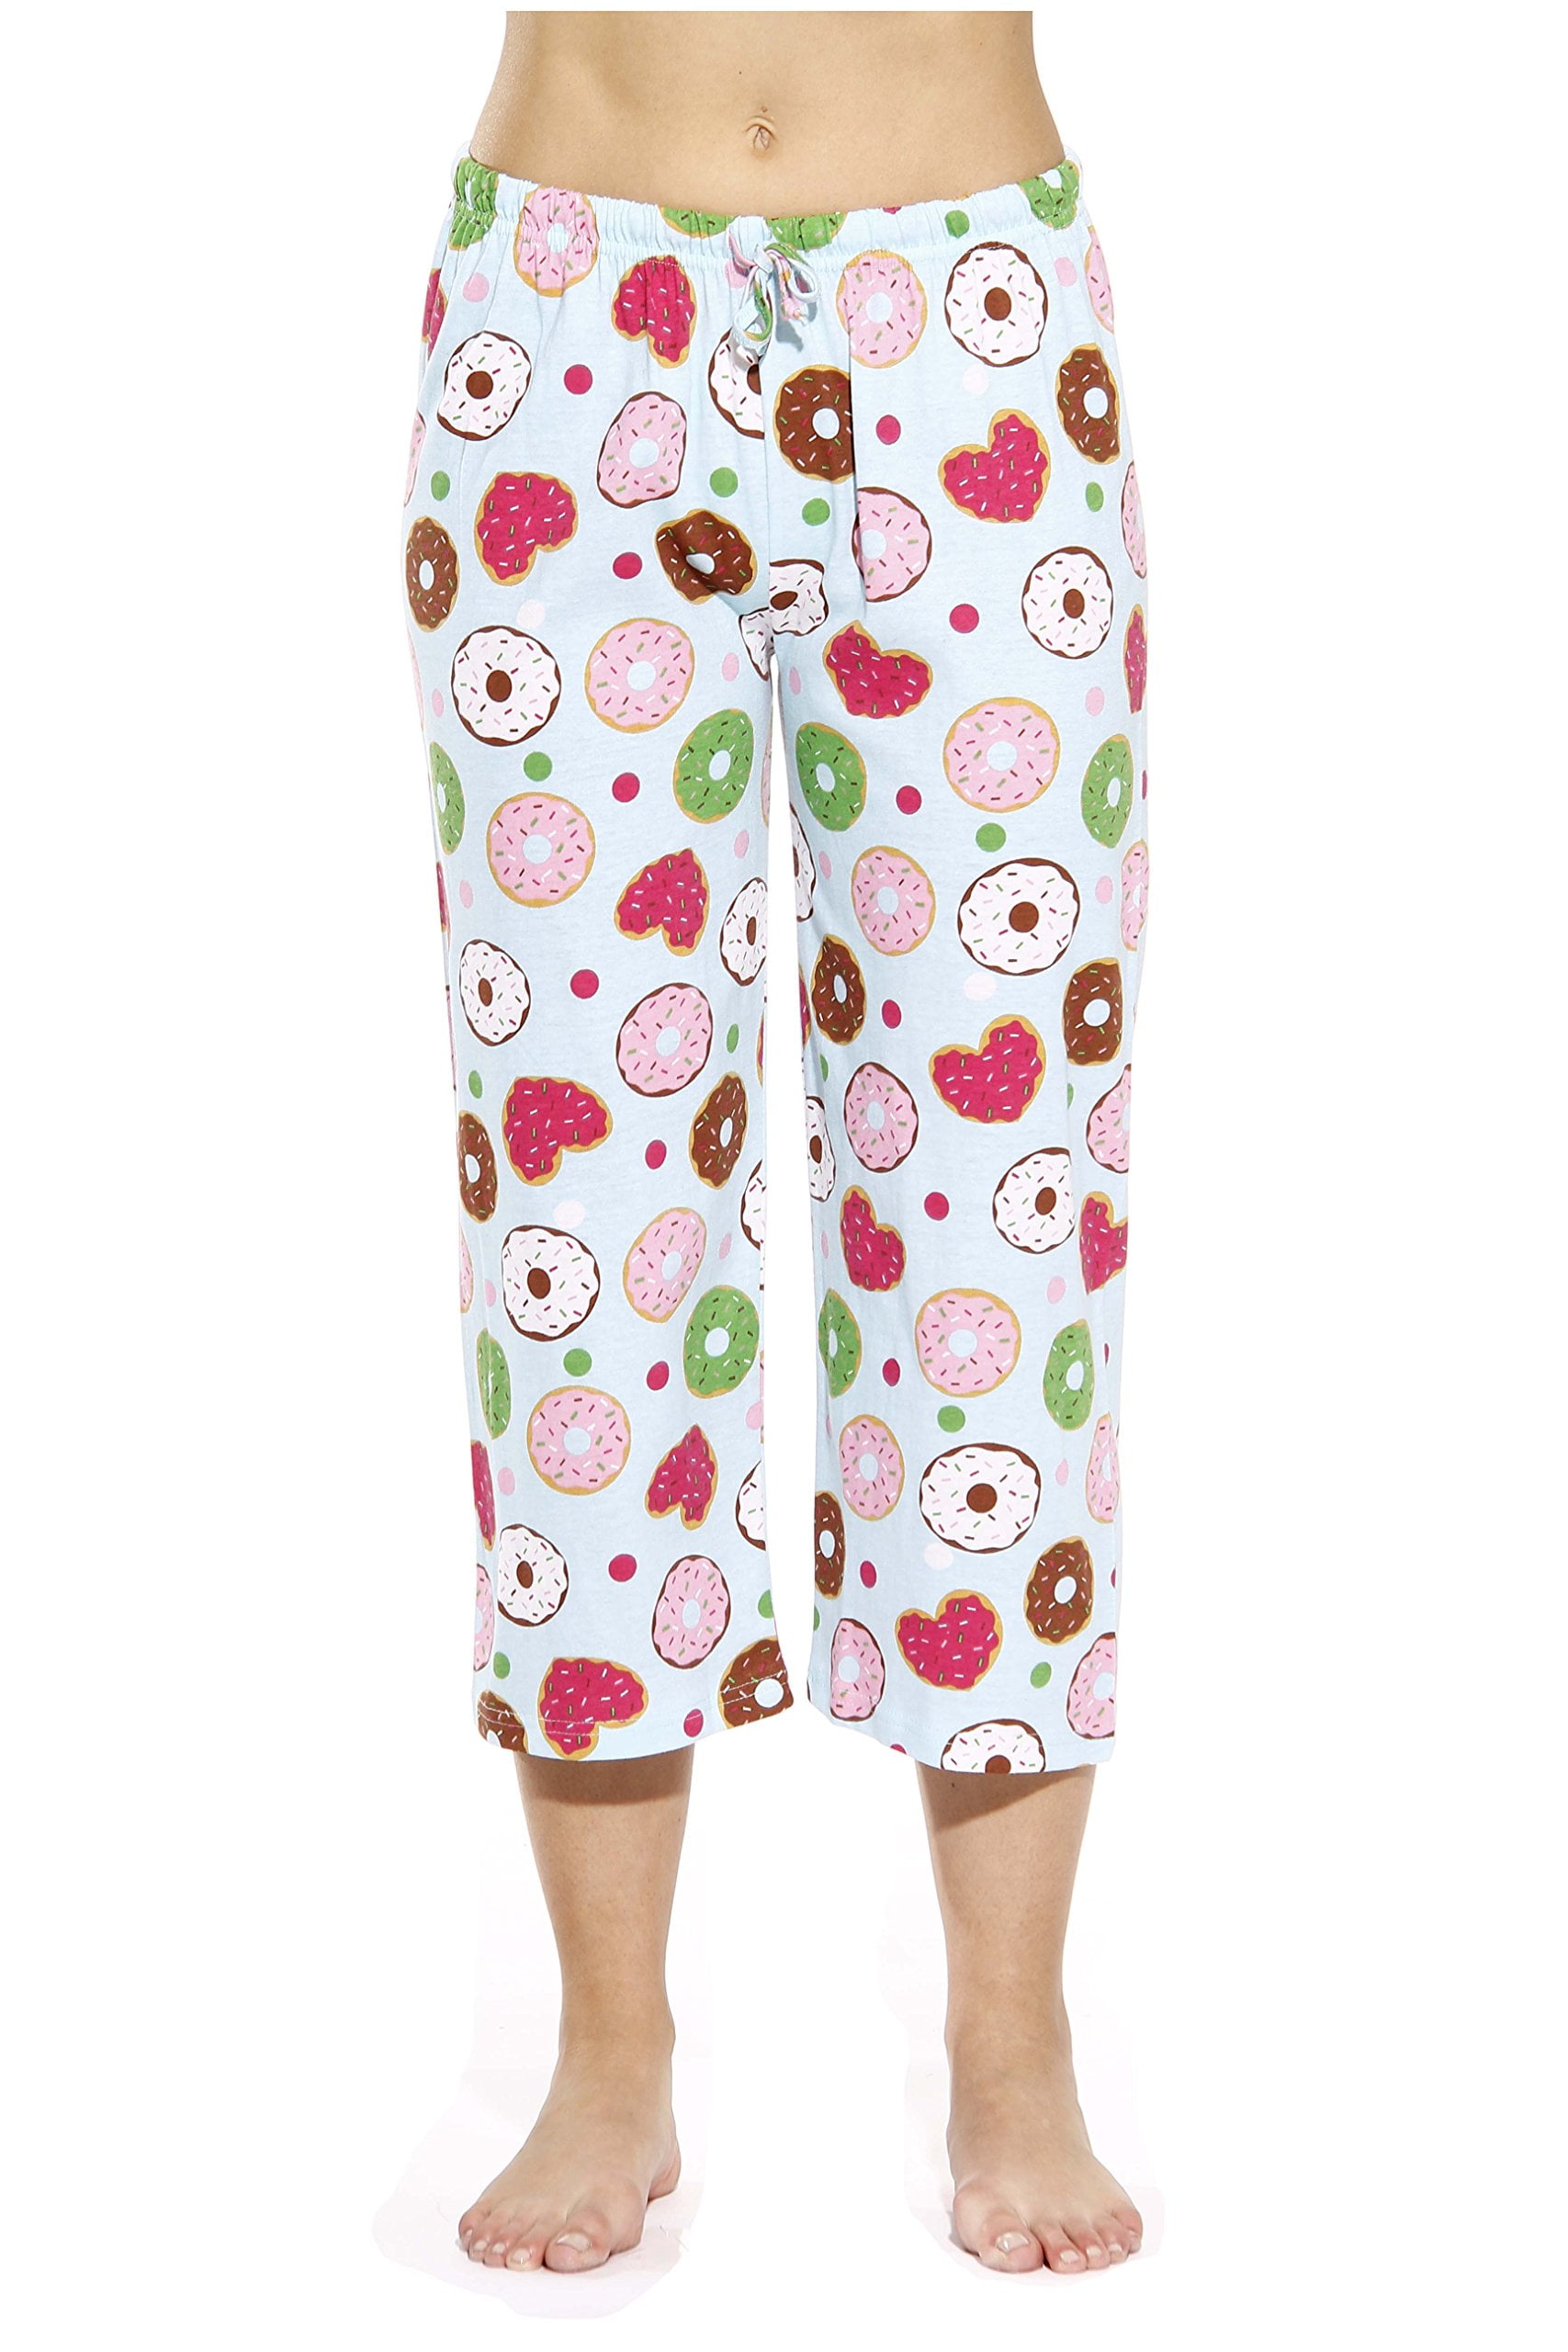 Just Love 100% Cotton Women's Capri Pajama Pants Sleepwear - Comfortable  and Stylish (Luv Donuts - Blue, Small) 